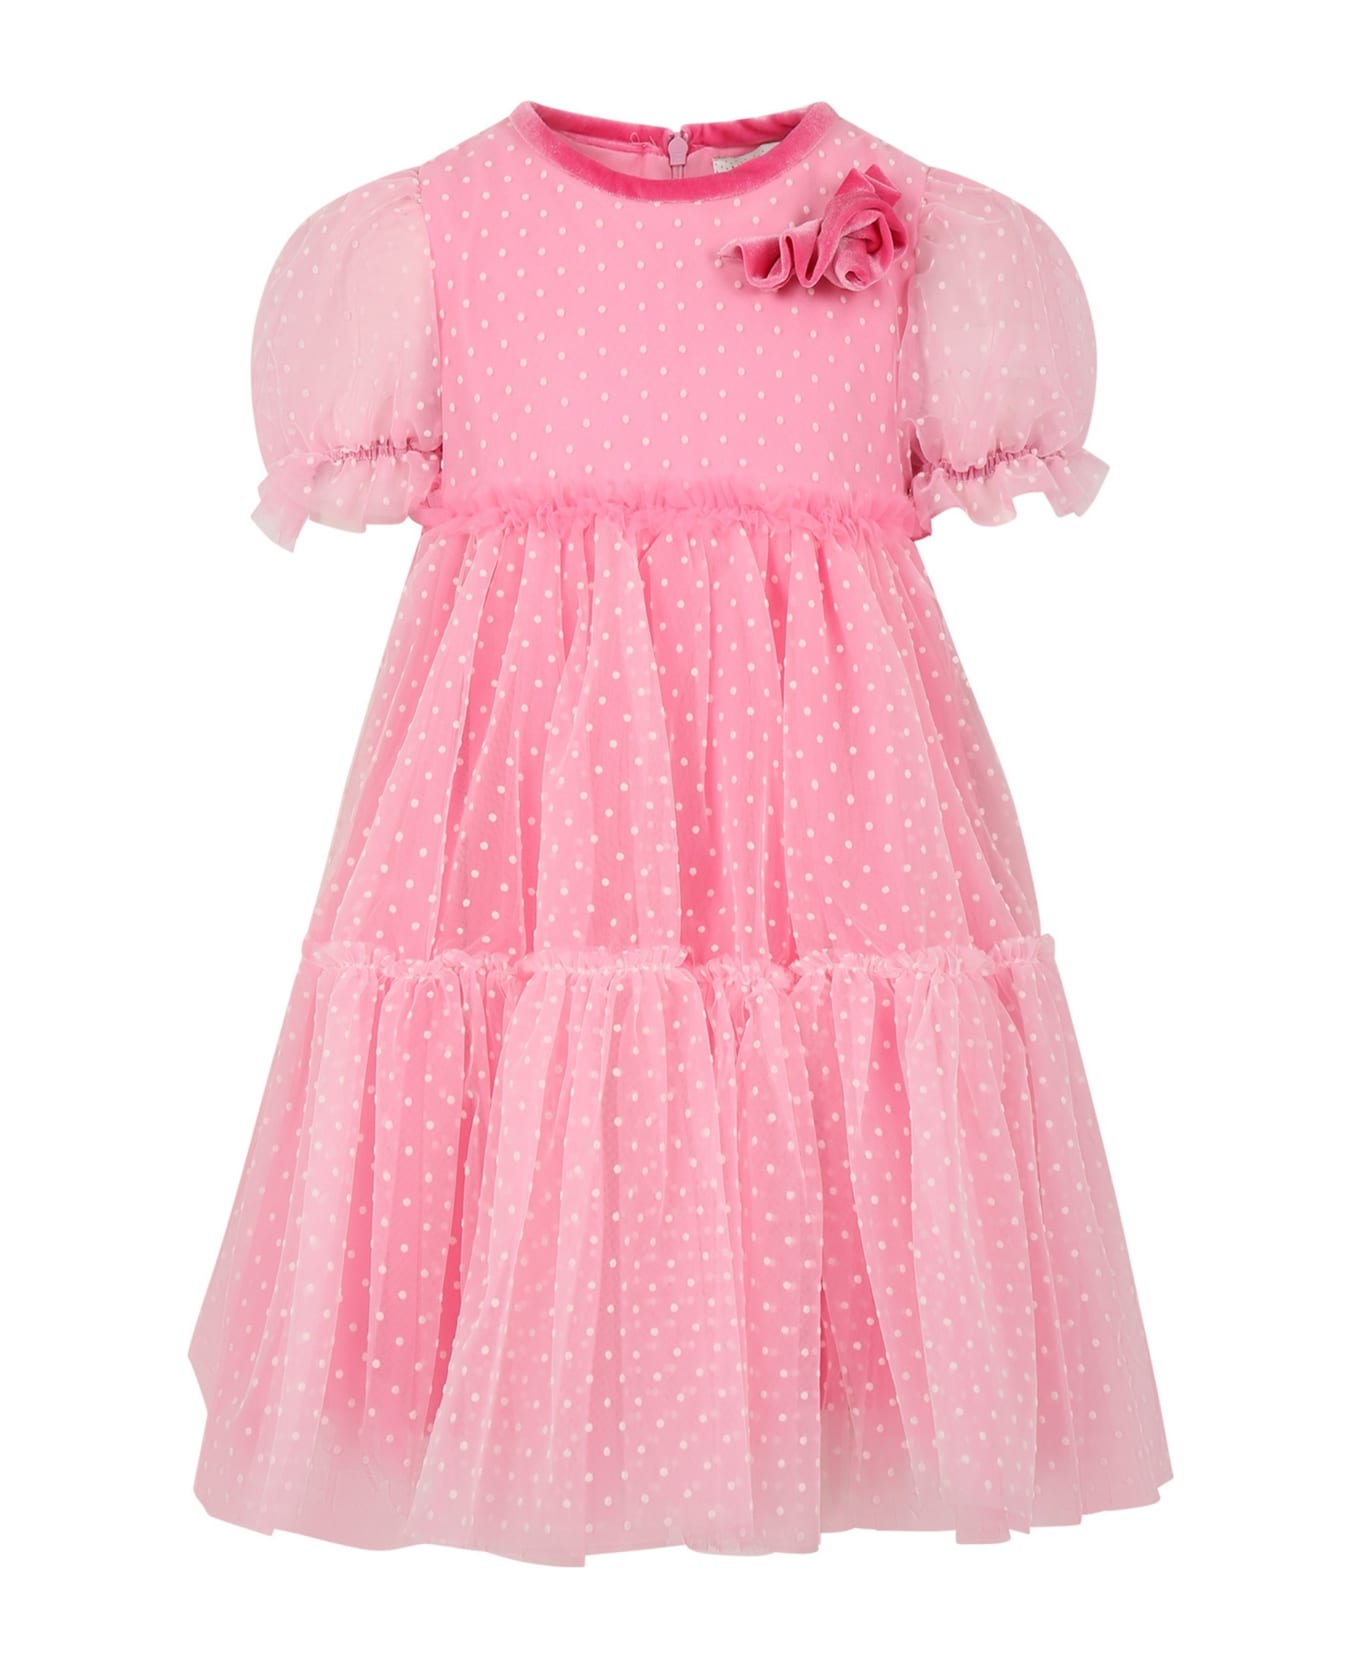 Monnalisa Pink Dress For Girl With Polka Dots - Pink